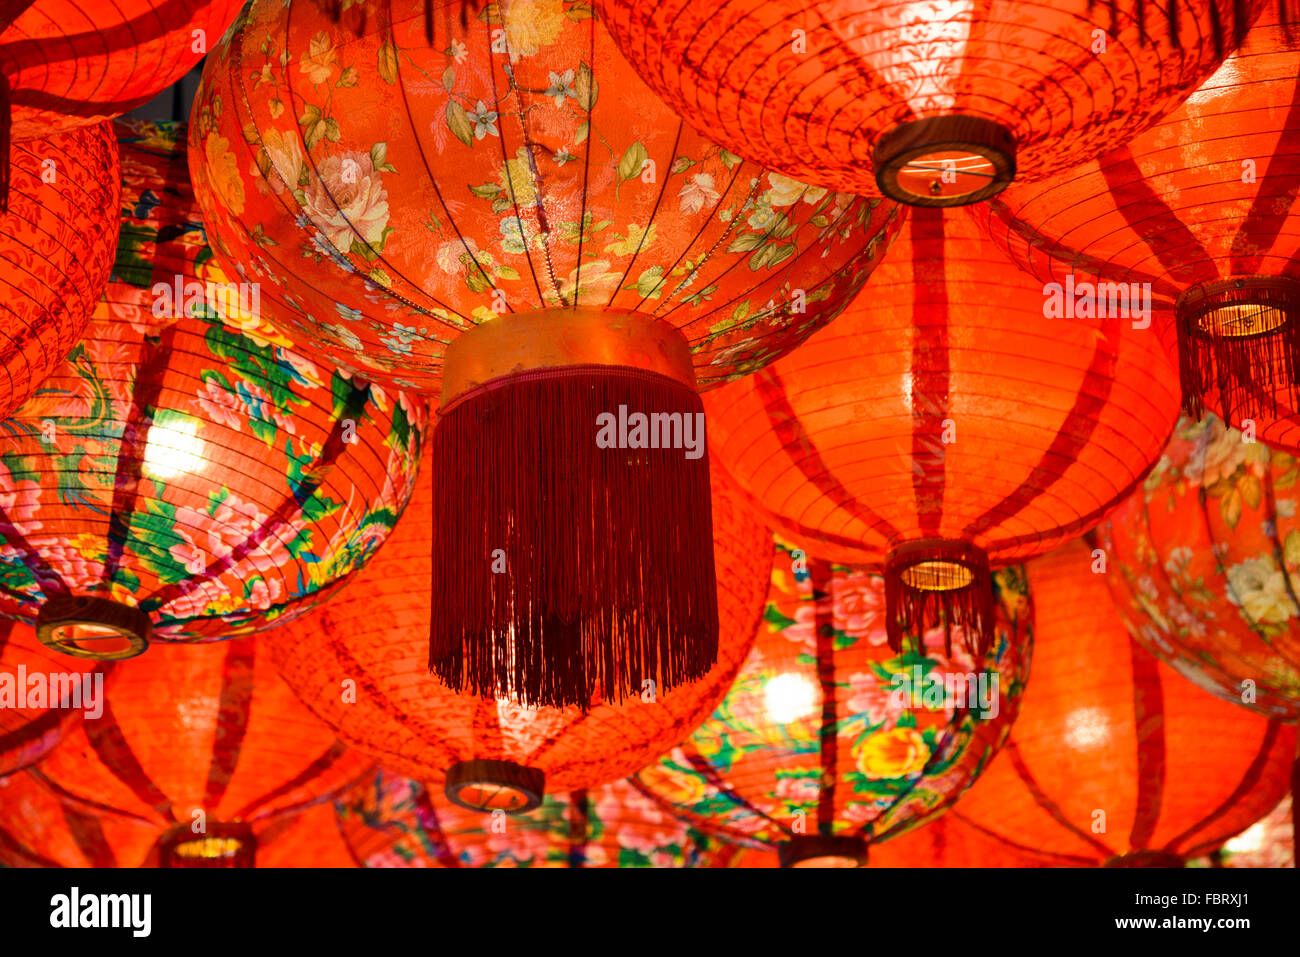 Chinese new year celebration decorations Stock Photo